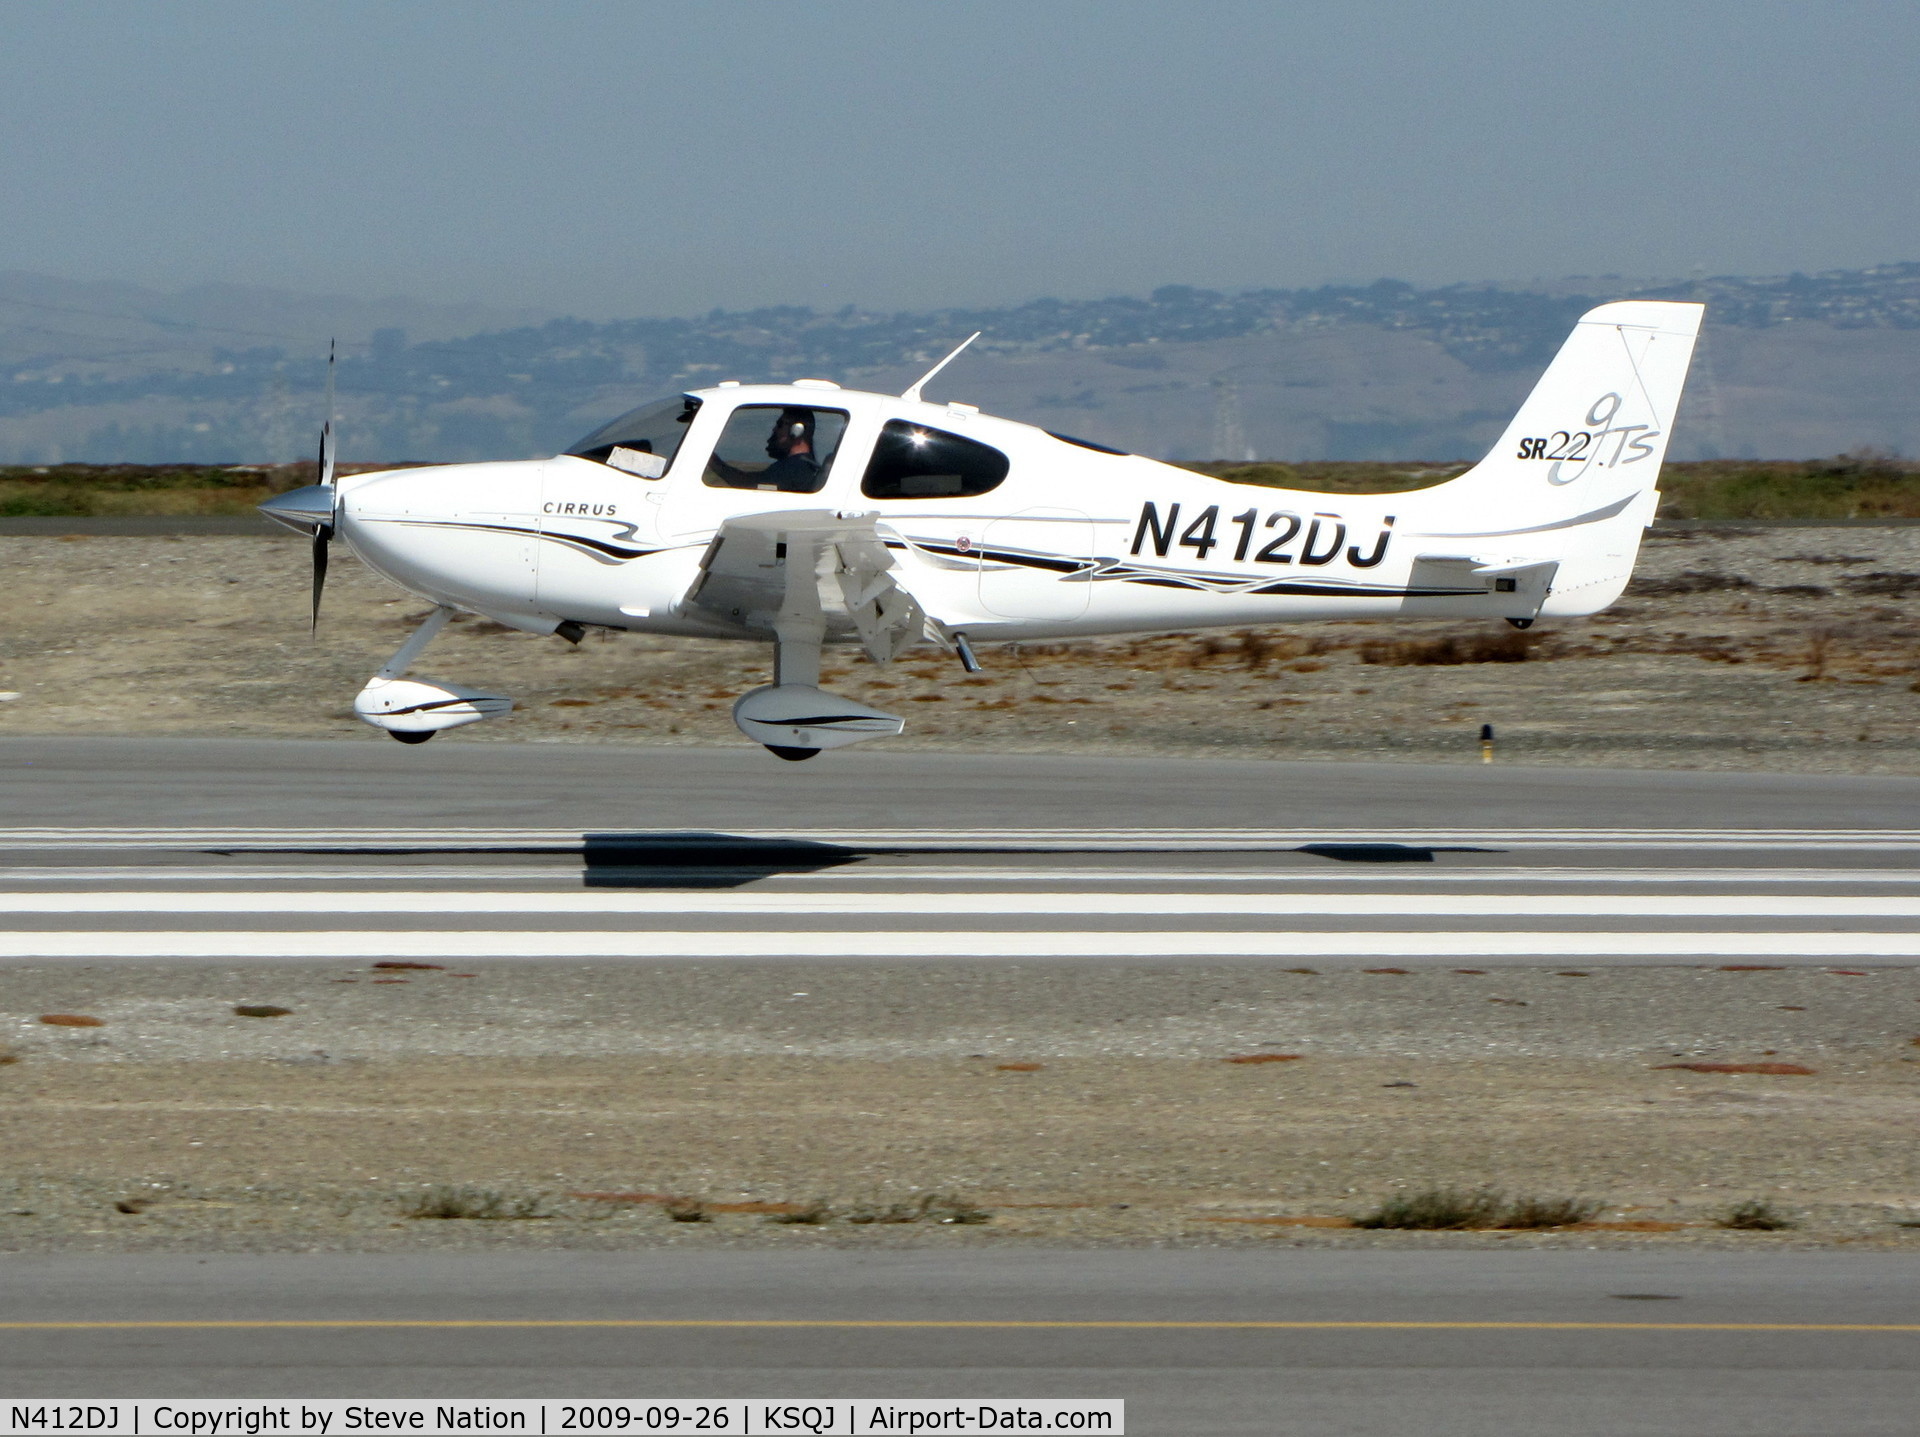 N412DJ, 2005 Cirrus SR22 C/N 1433, 2005 Cirrus Design Corp SR22 near touchdown on flight from Portland, OR